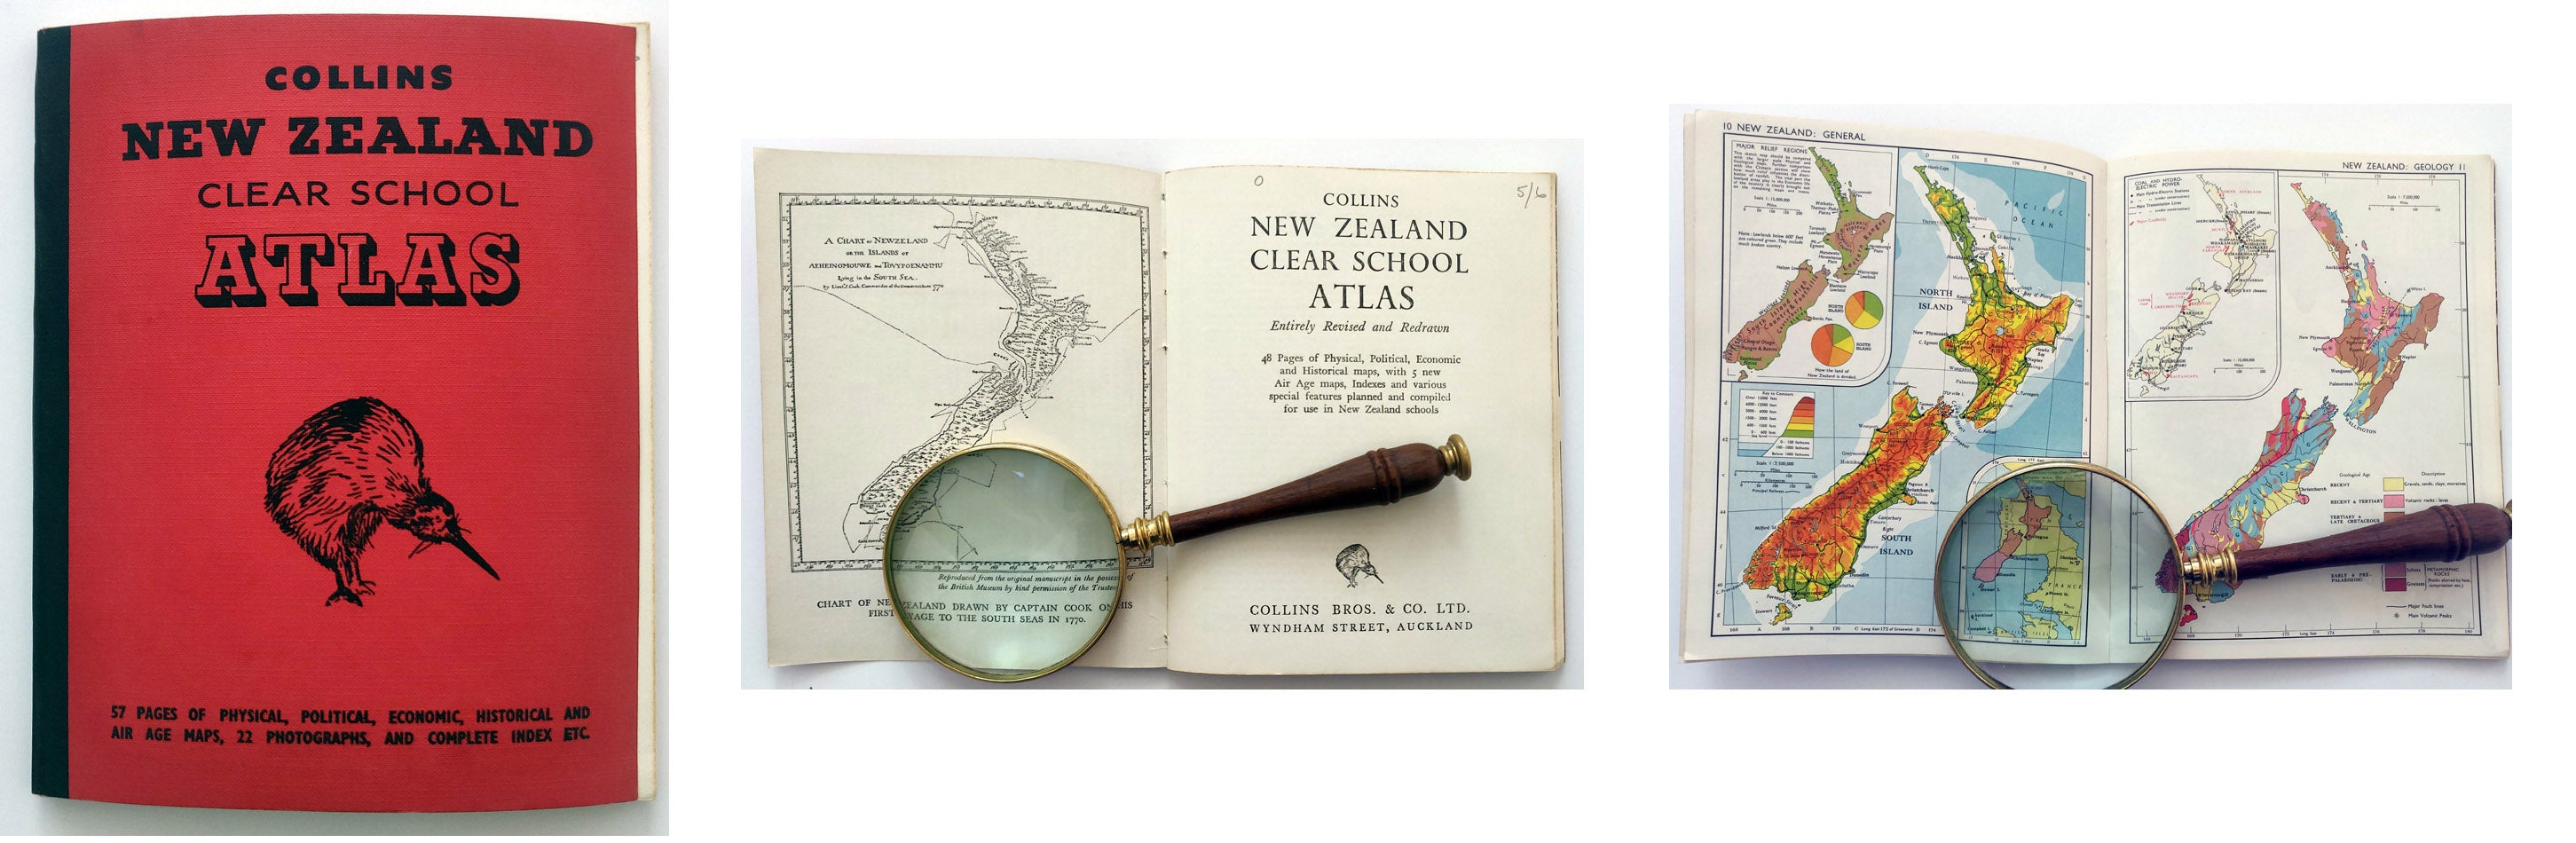 (NZ) Collins New Zealand Clear School Atlas